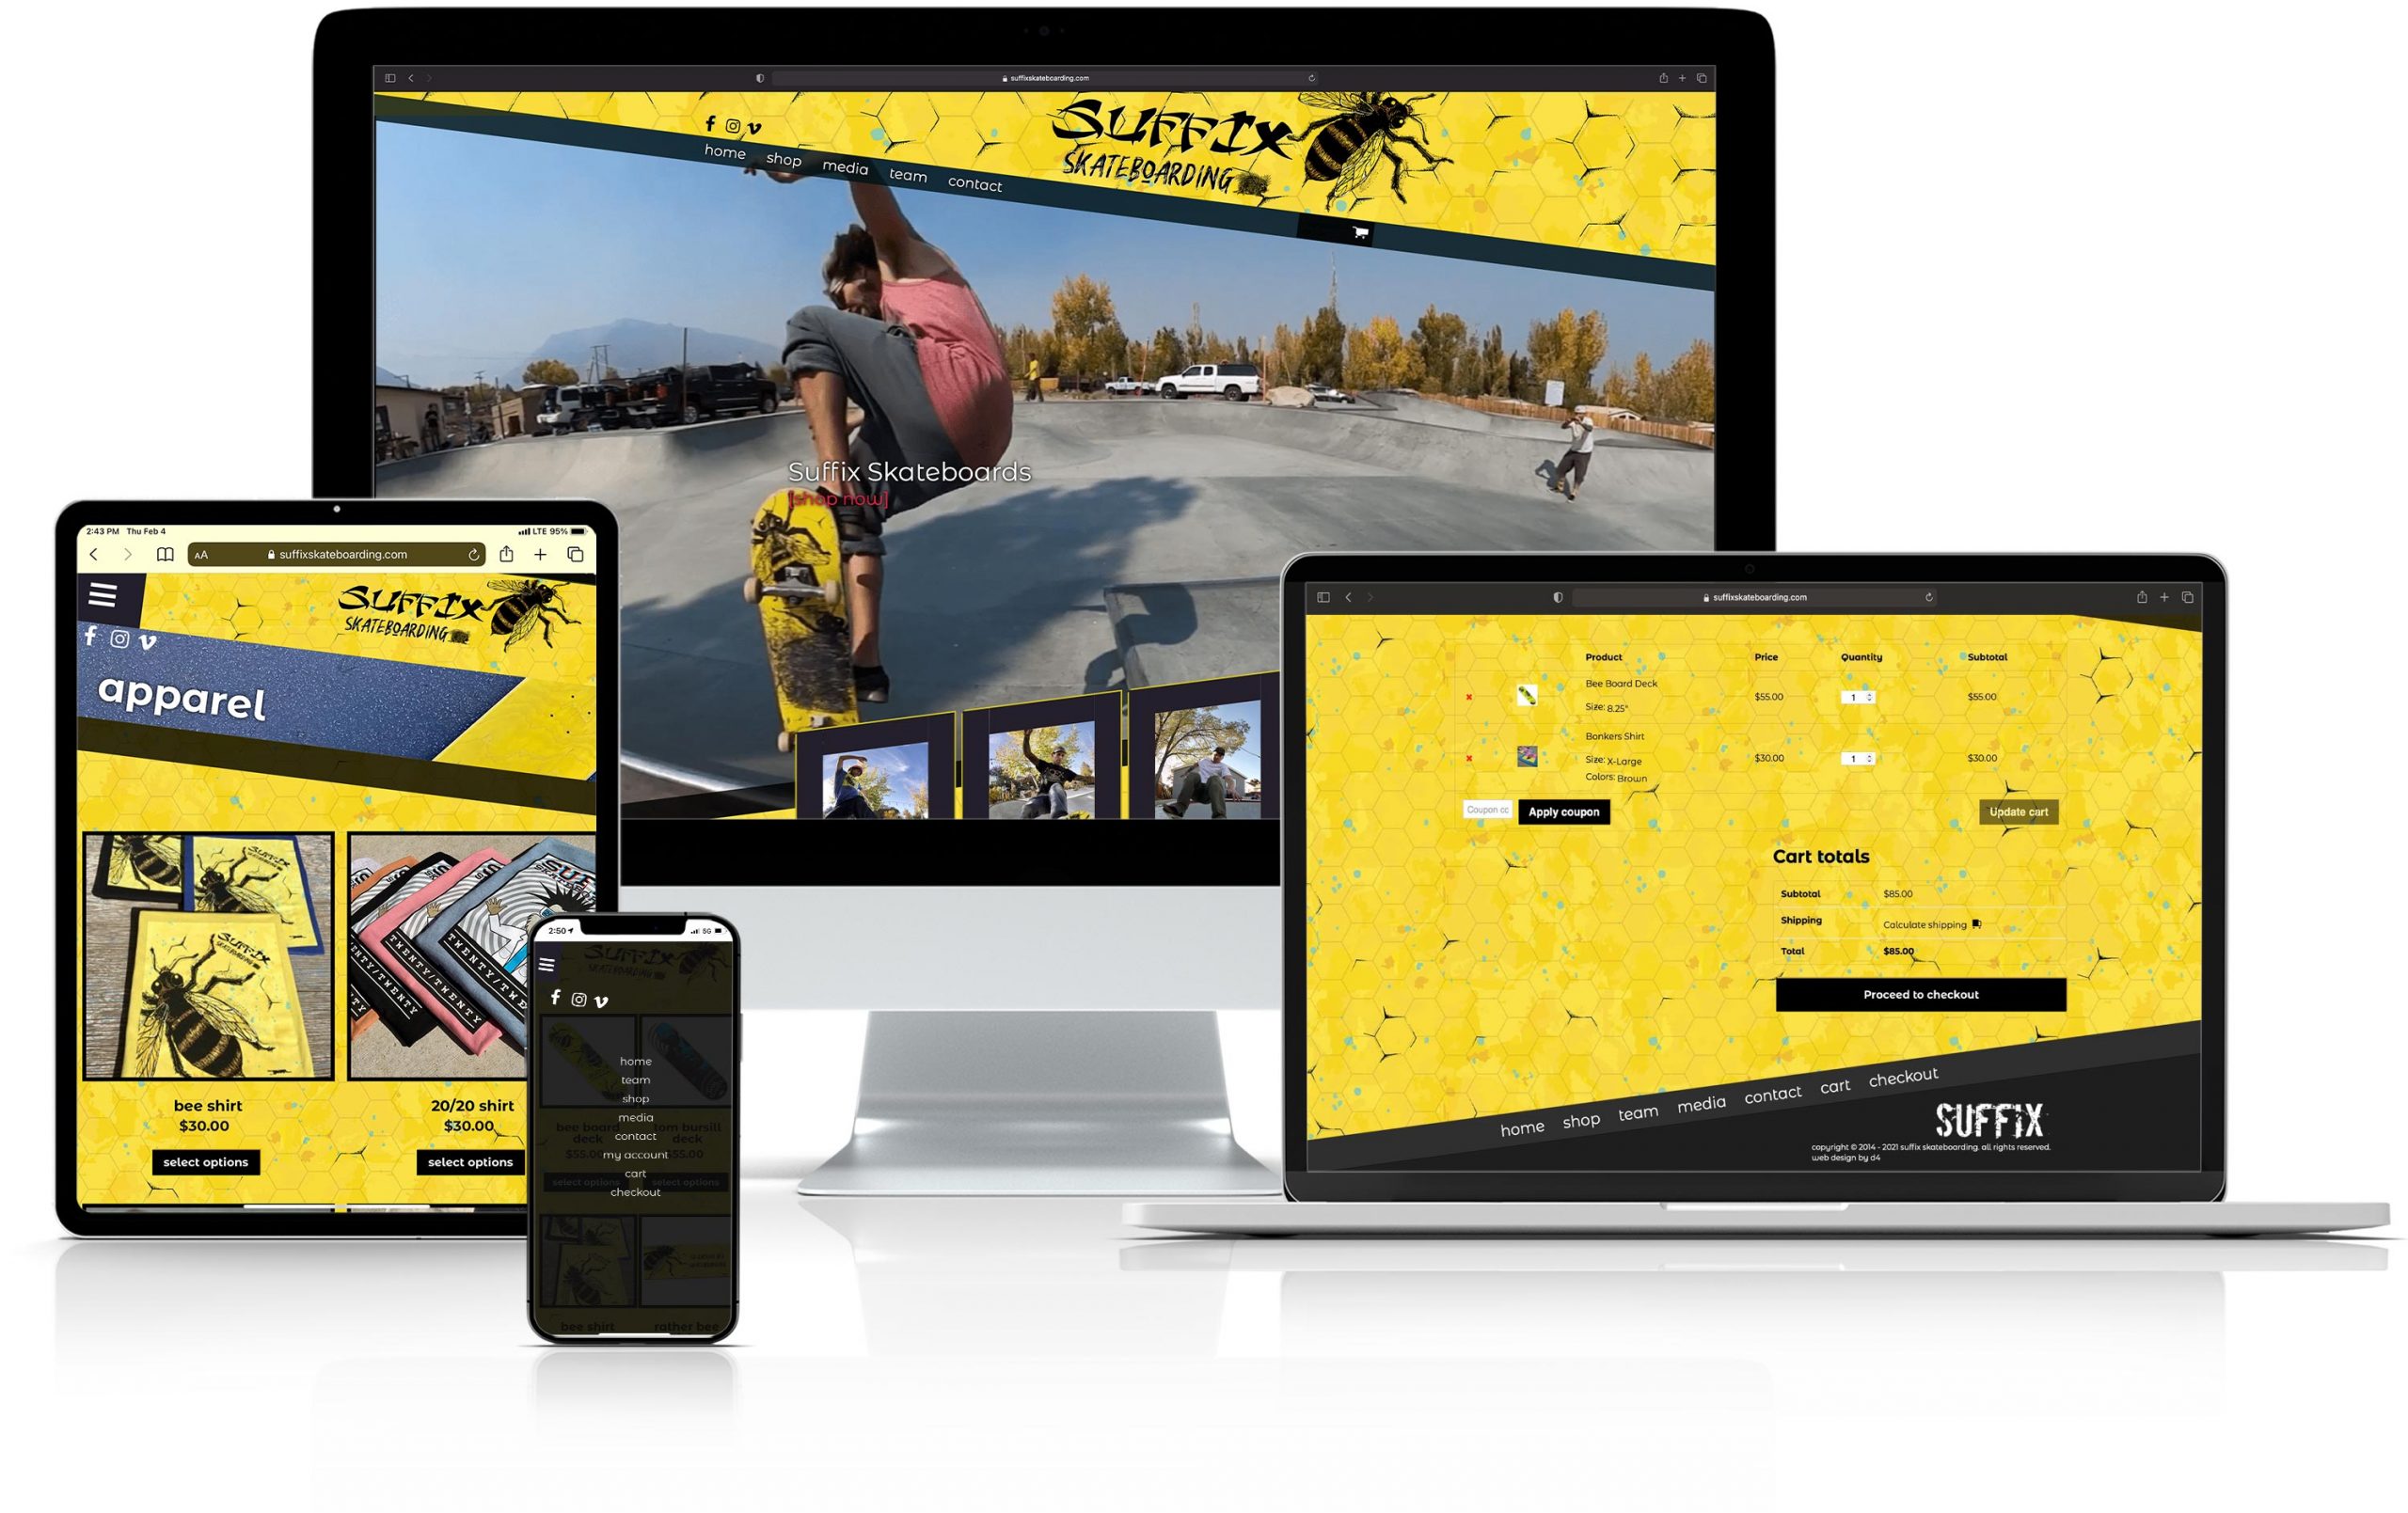 Suffix Skateboarding – Website Design